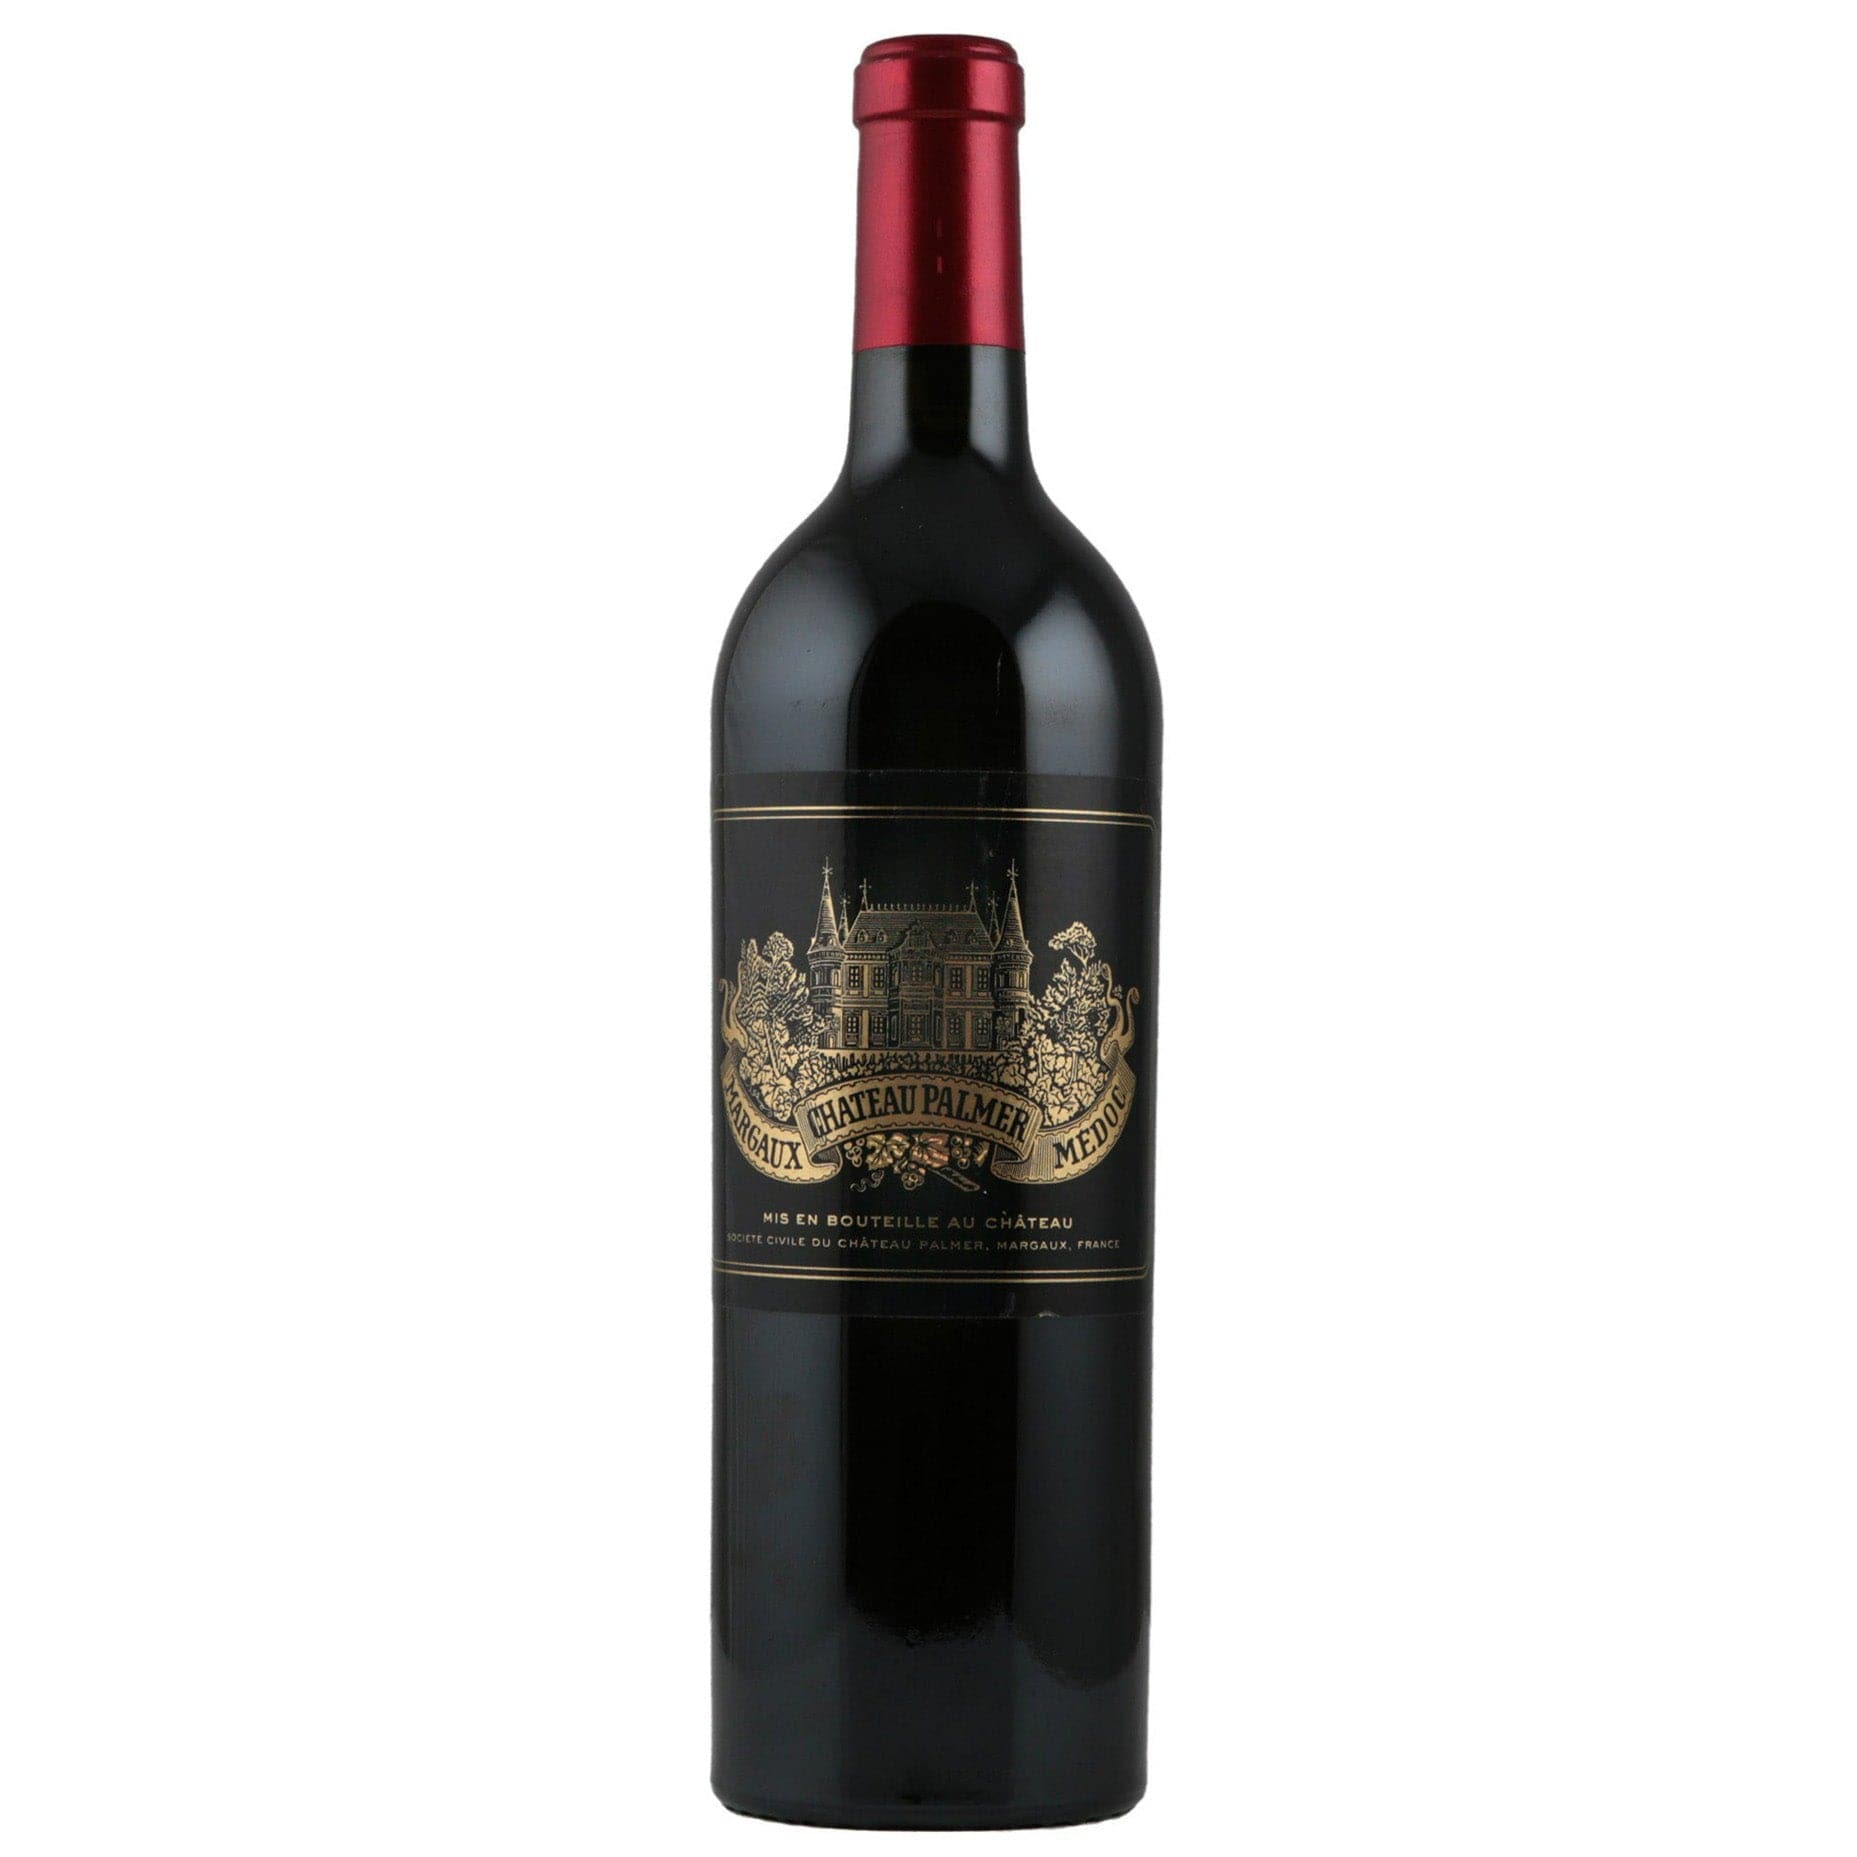 Single bottle of Red wine Ch. Palmer, 3rd Growth Grand Cru Classe, Margaux, 2000 53% Cabernet Sauvignon & 47% Merlot